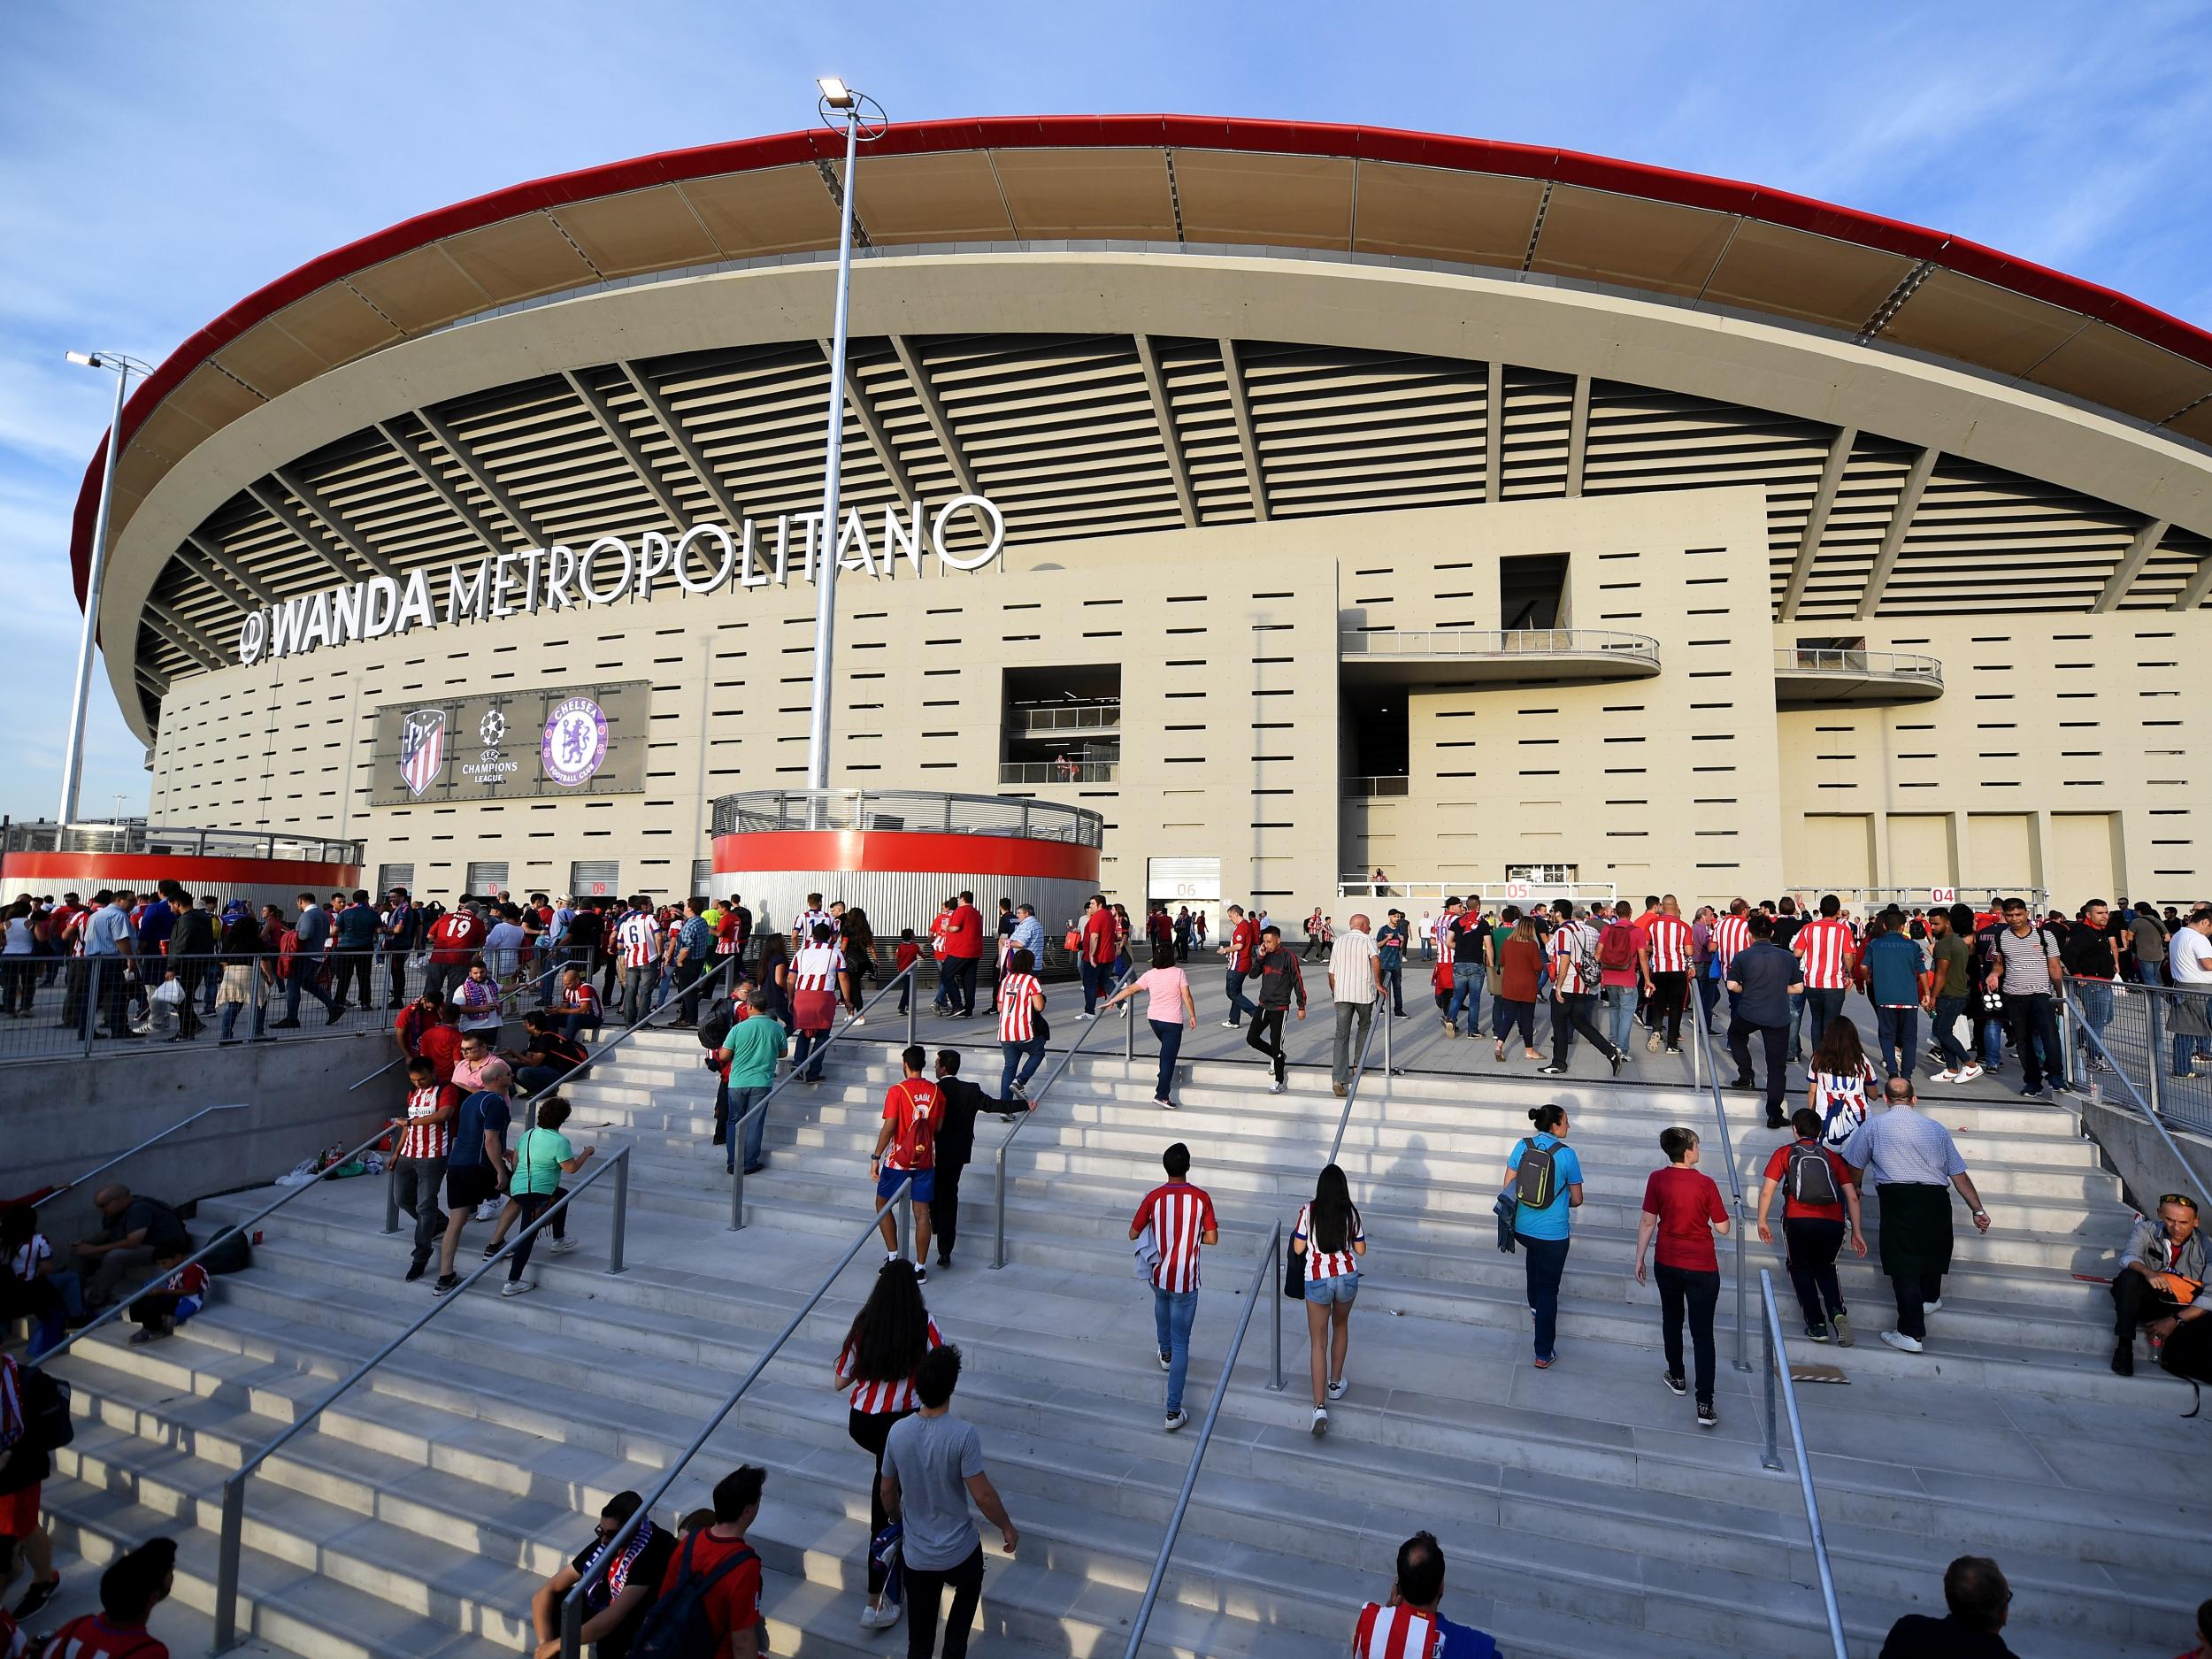 The Wanda Metropolitano got its first taste of Champions League football